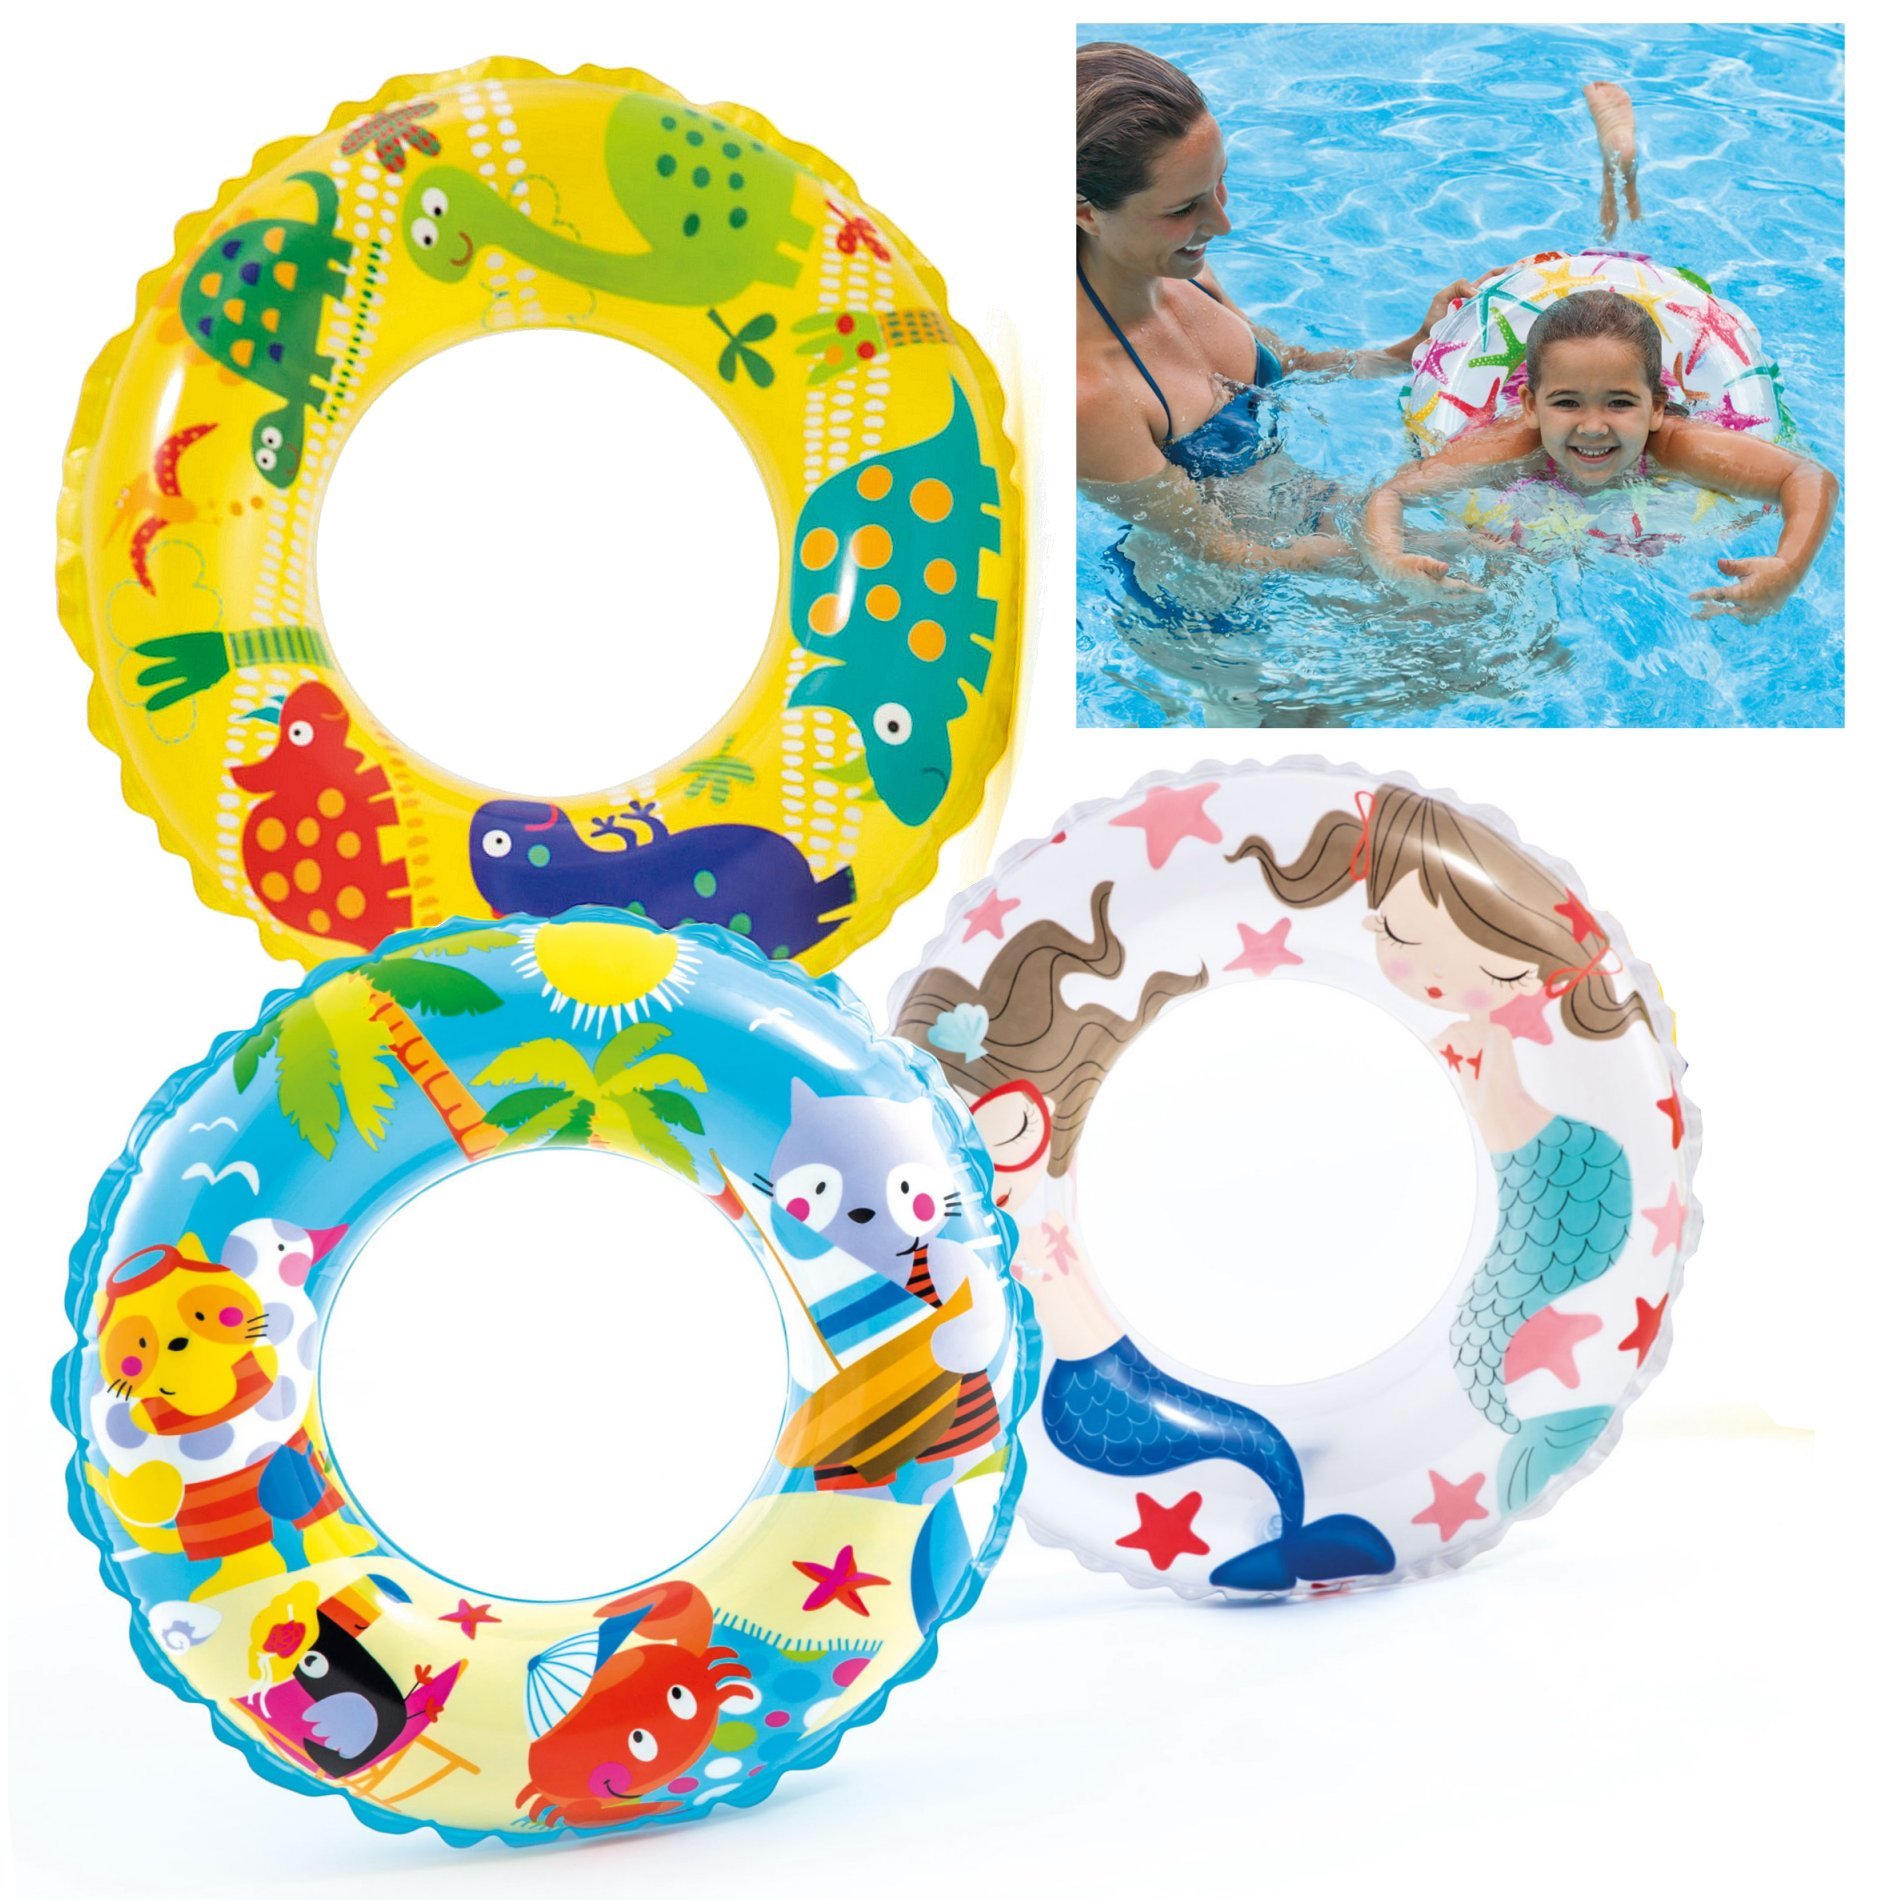 Intex 24" Inflatable Swim Ring Childrens Pool Fun - Assorted Design - Pool Toy